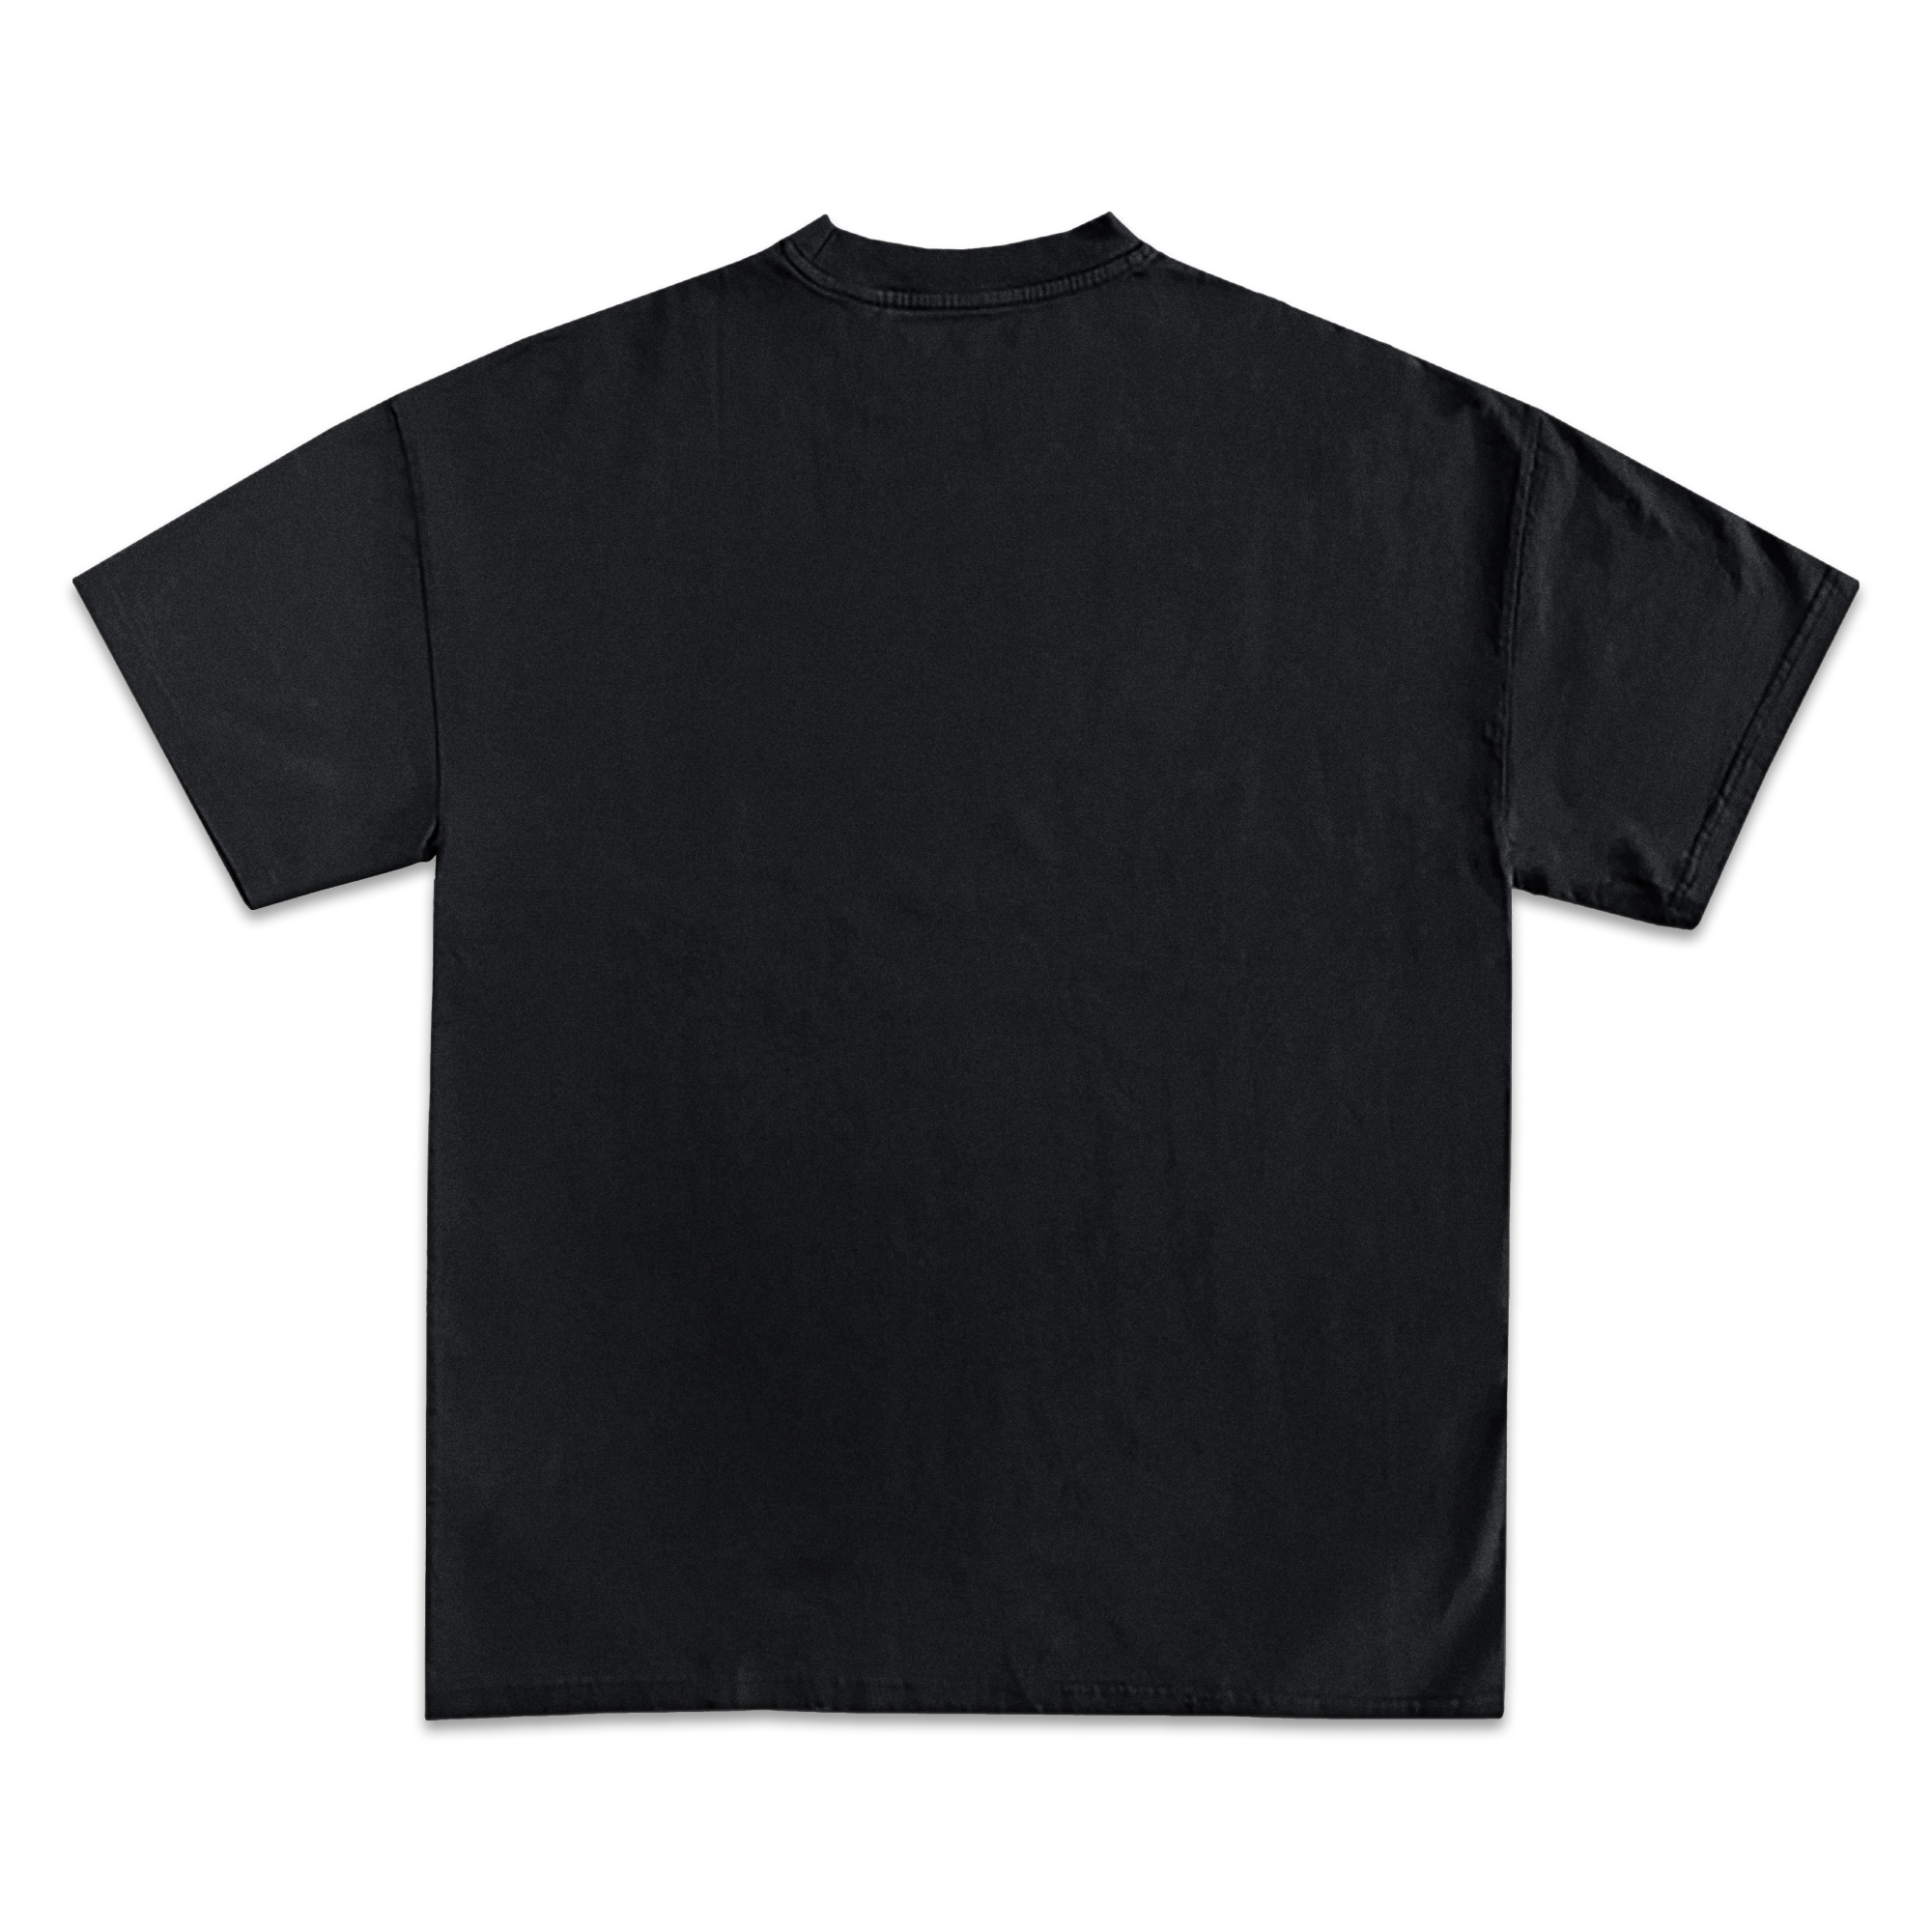 Damian Lillard Icy Exclusive Graphic T-Shirt